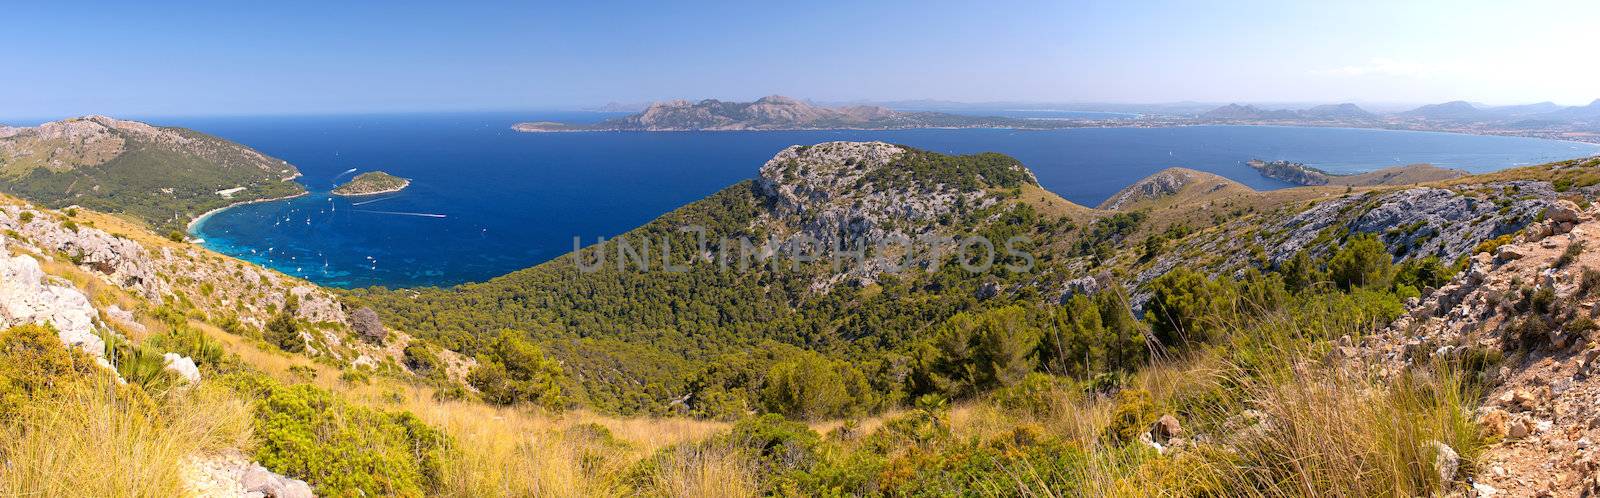 Panorama View of Cala Pi de La Posada in Mallorca, Spain ( Balearic Islands )